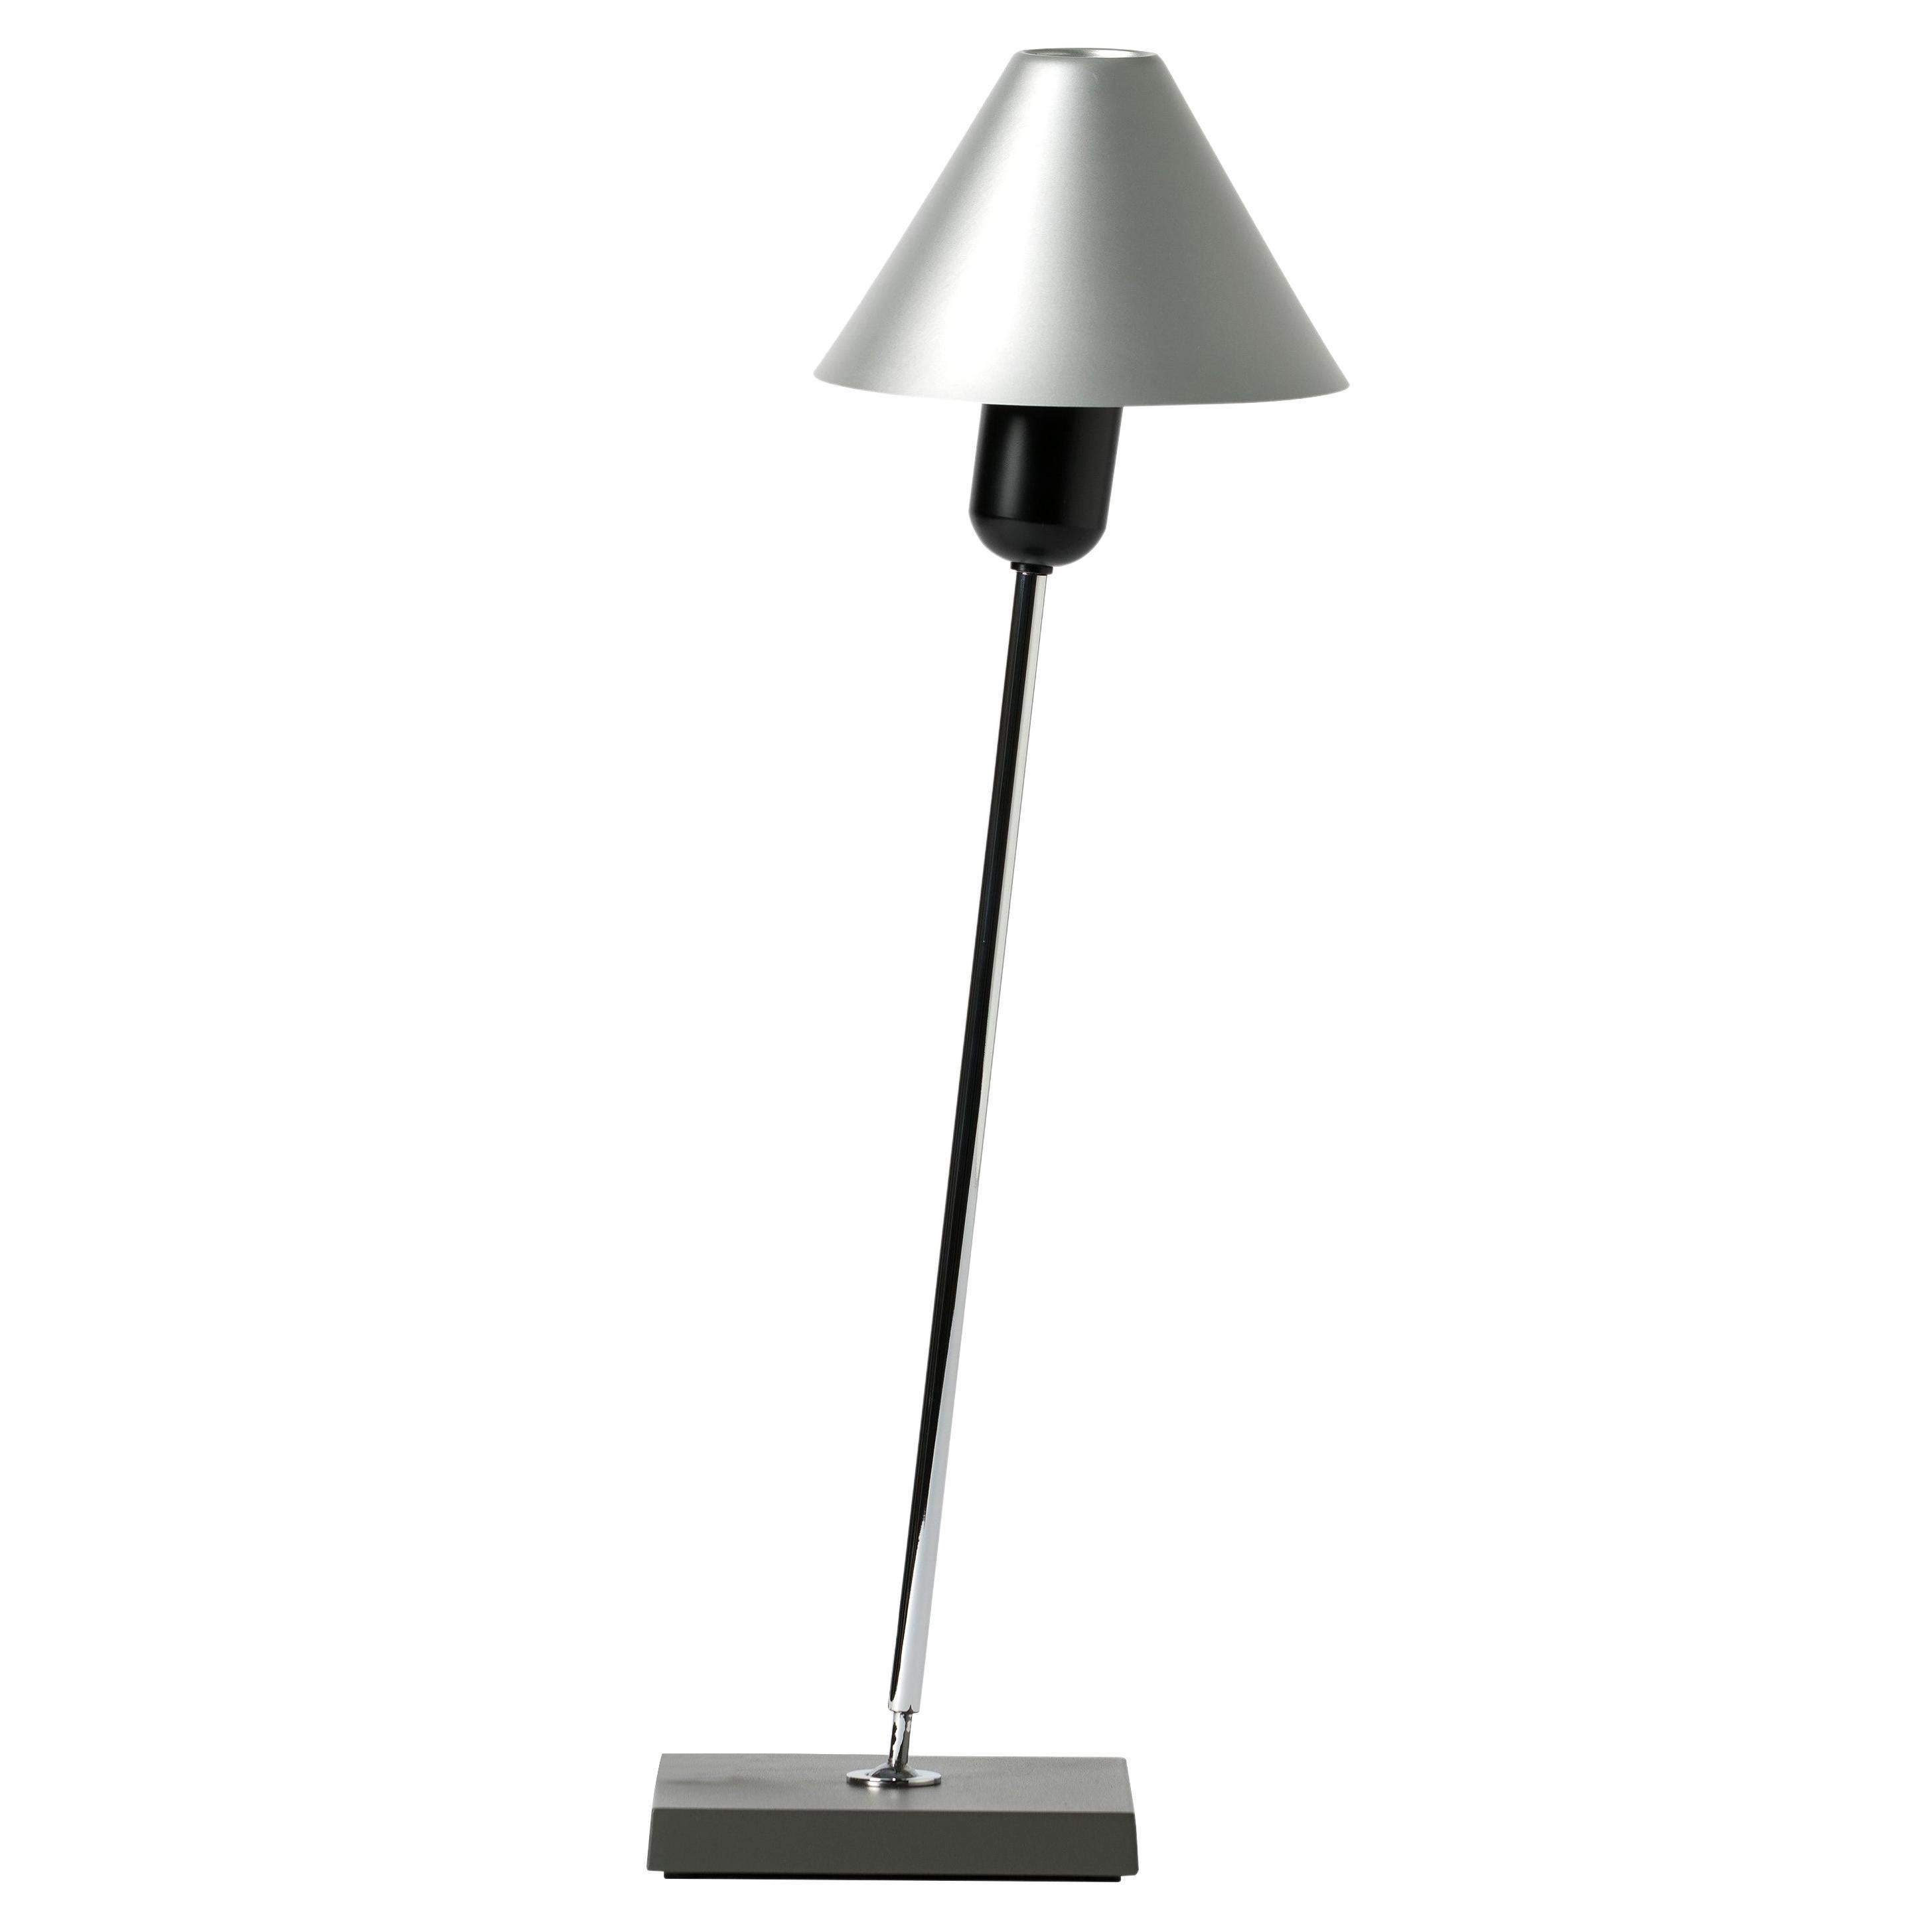 Aluminum Gira Table Lamp by J.M. Massana, J.M. Tremoleda, Mariano Ferrer